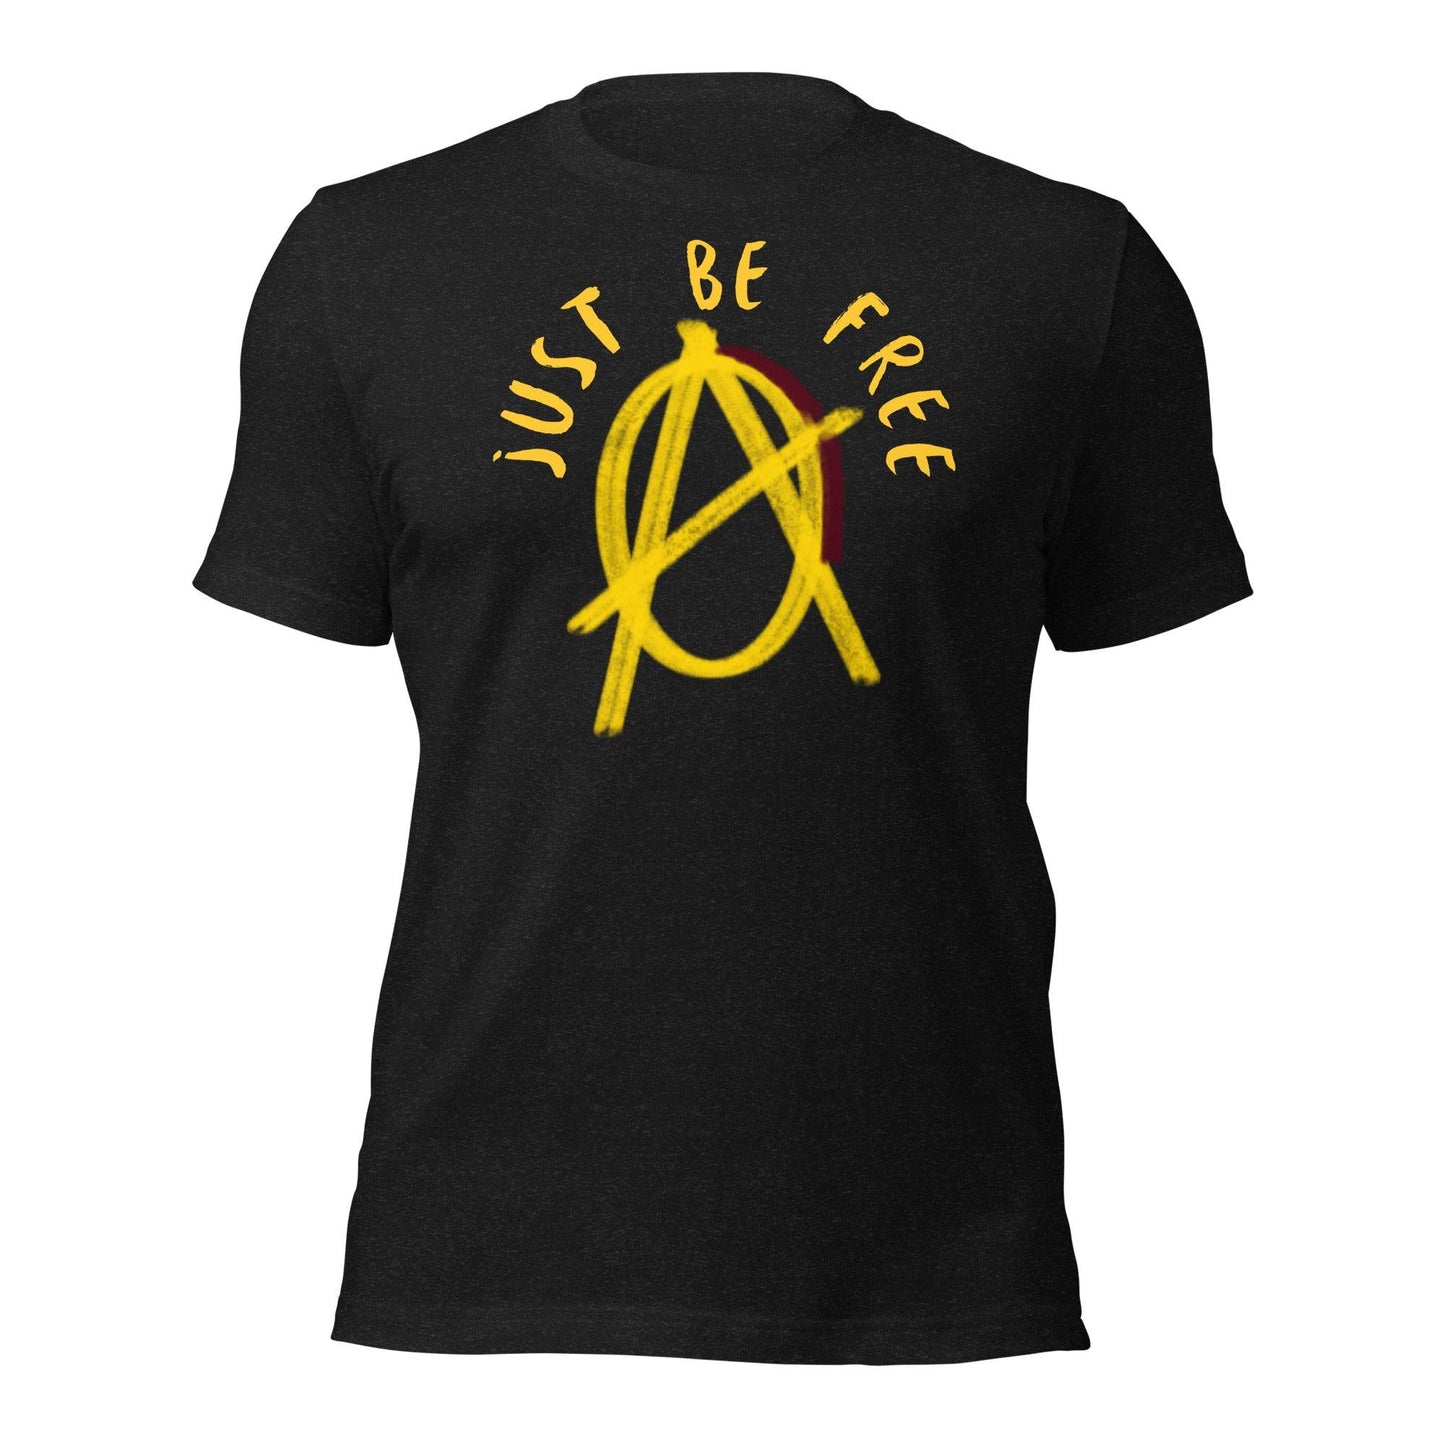 Anarchy Wear "Just Be Free" Unisex t-shirt - AnarchyWear